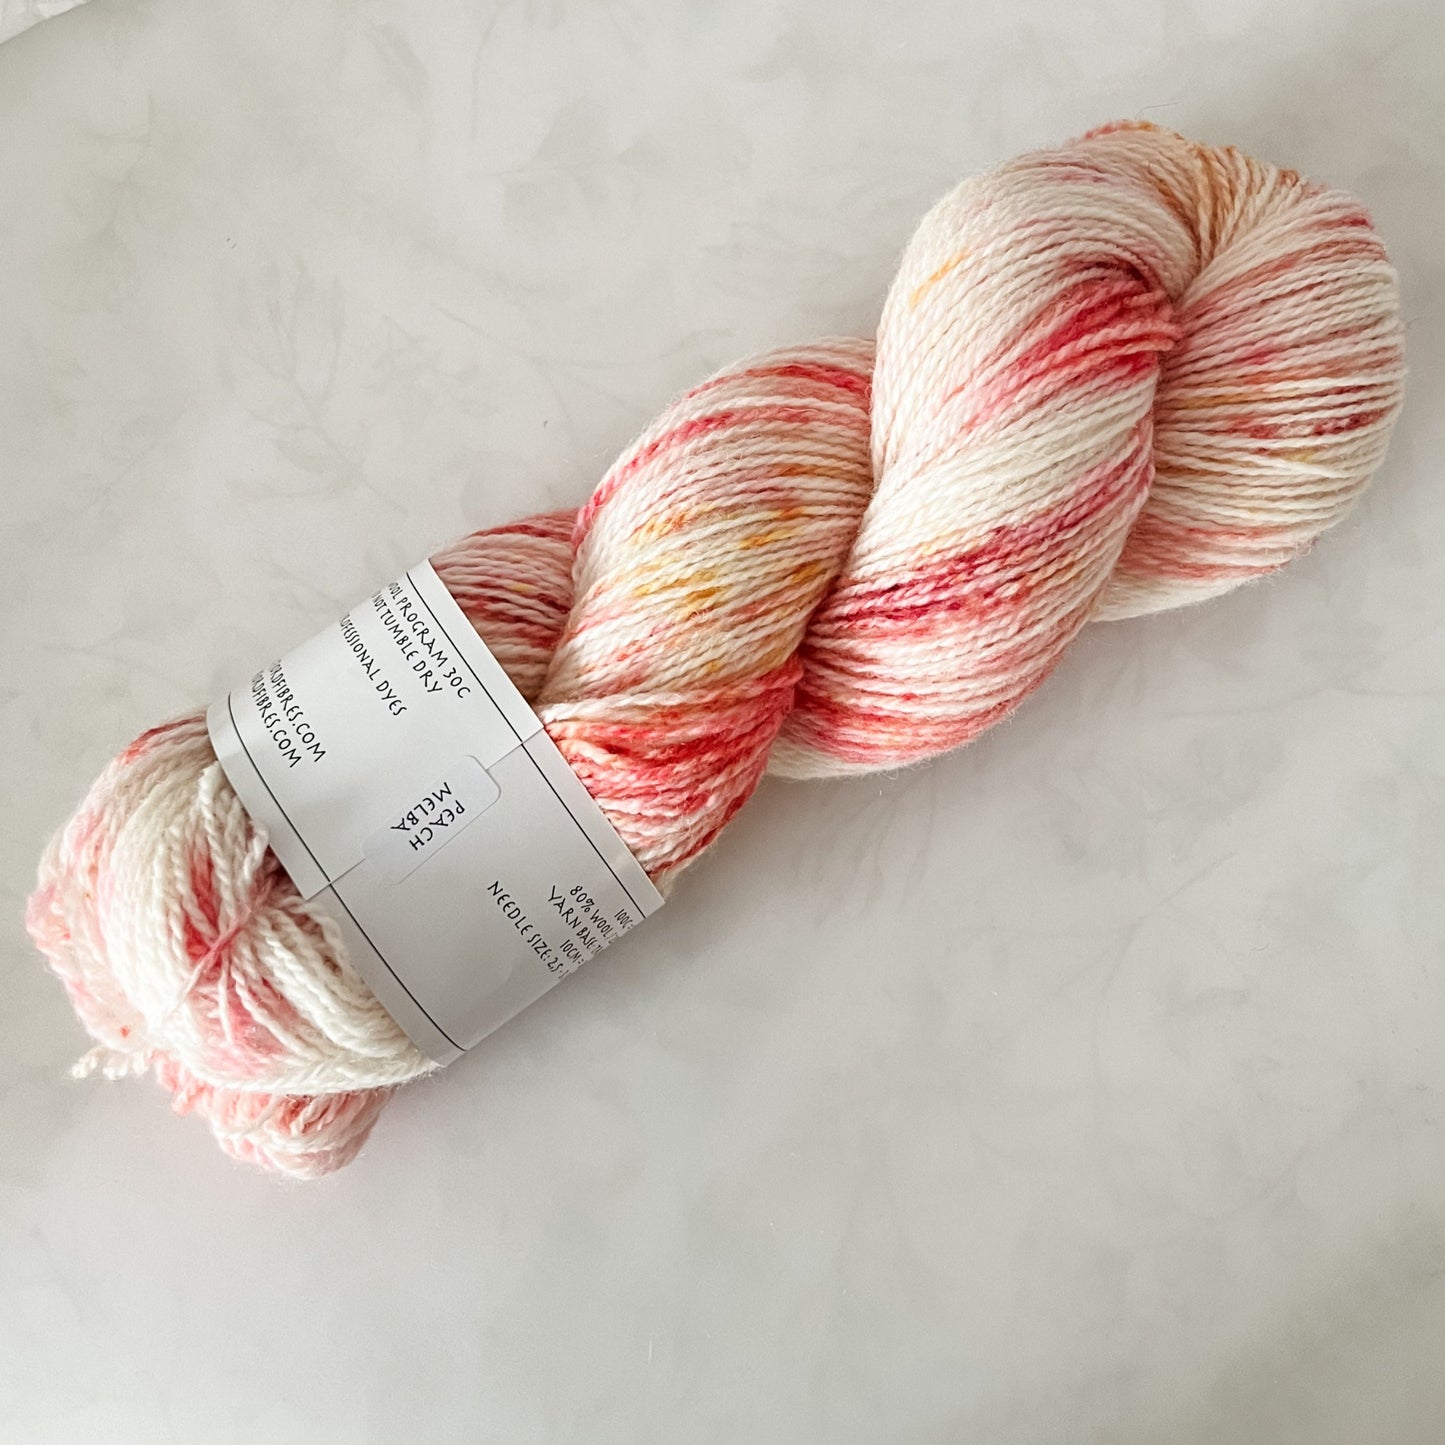 Peach Melba - Trollfjord sock - Hand Dyed Yarn - Variegated Yarn